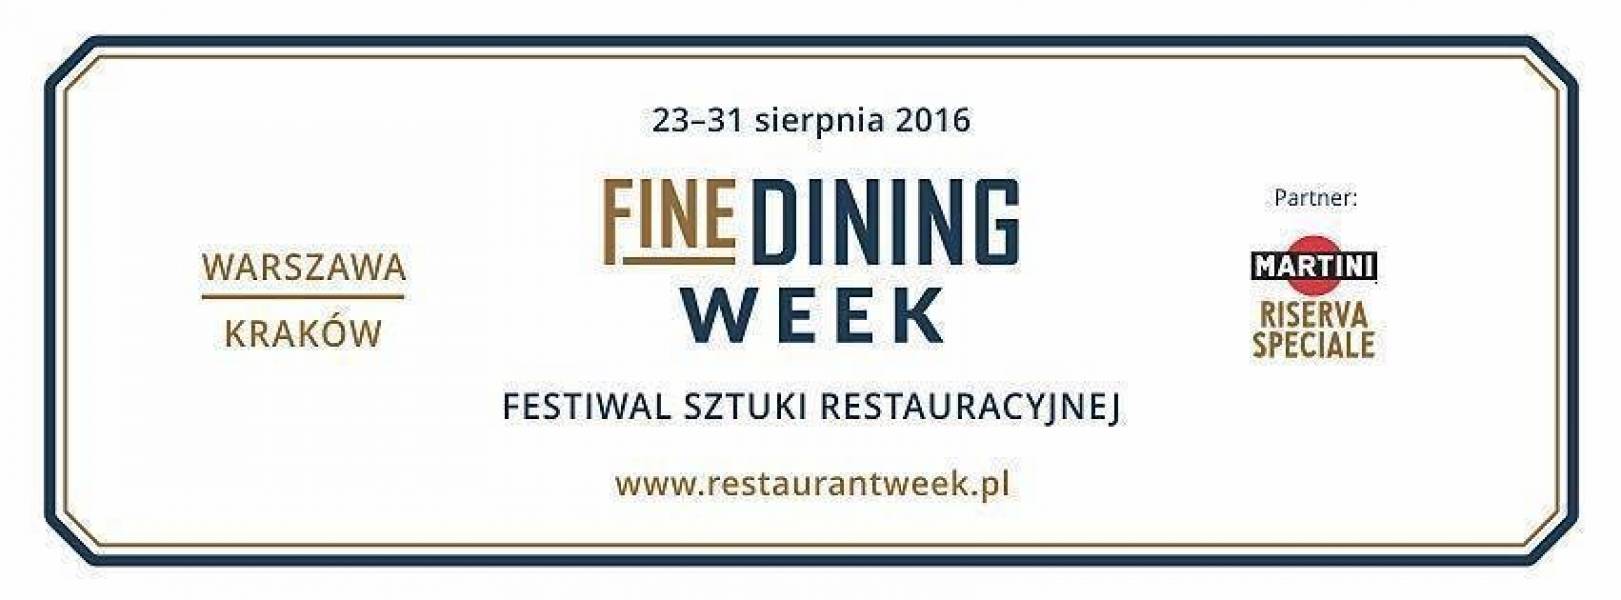 23-31 SIERPNIA – FESTIWAL FINE DINING WEEK – KRAKÓW I WARSZAWA